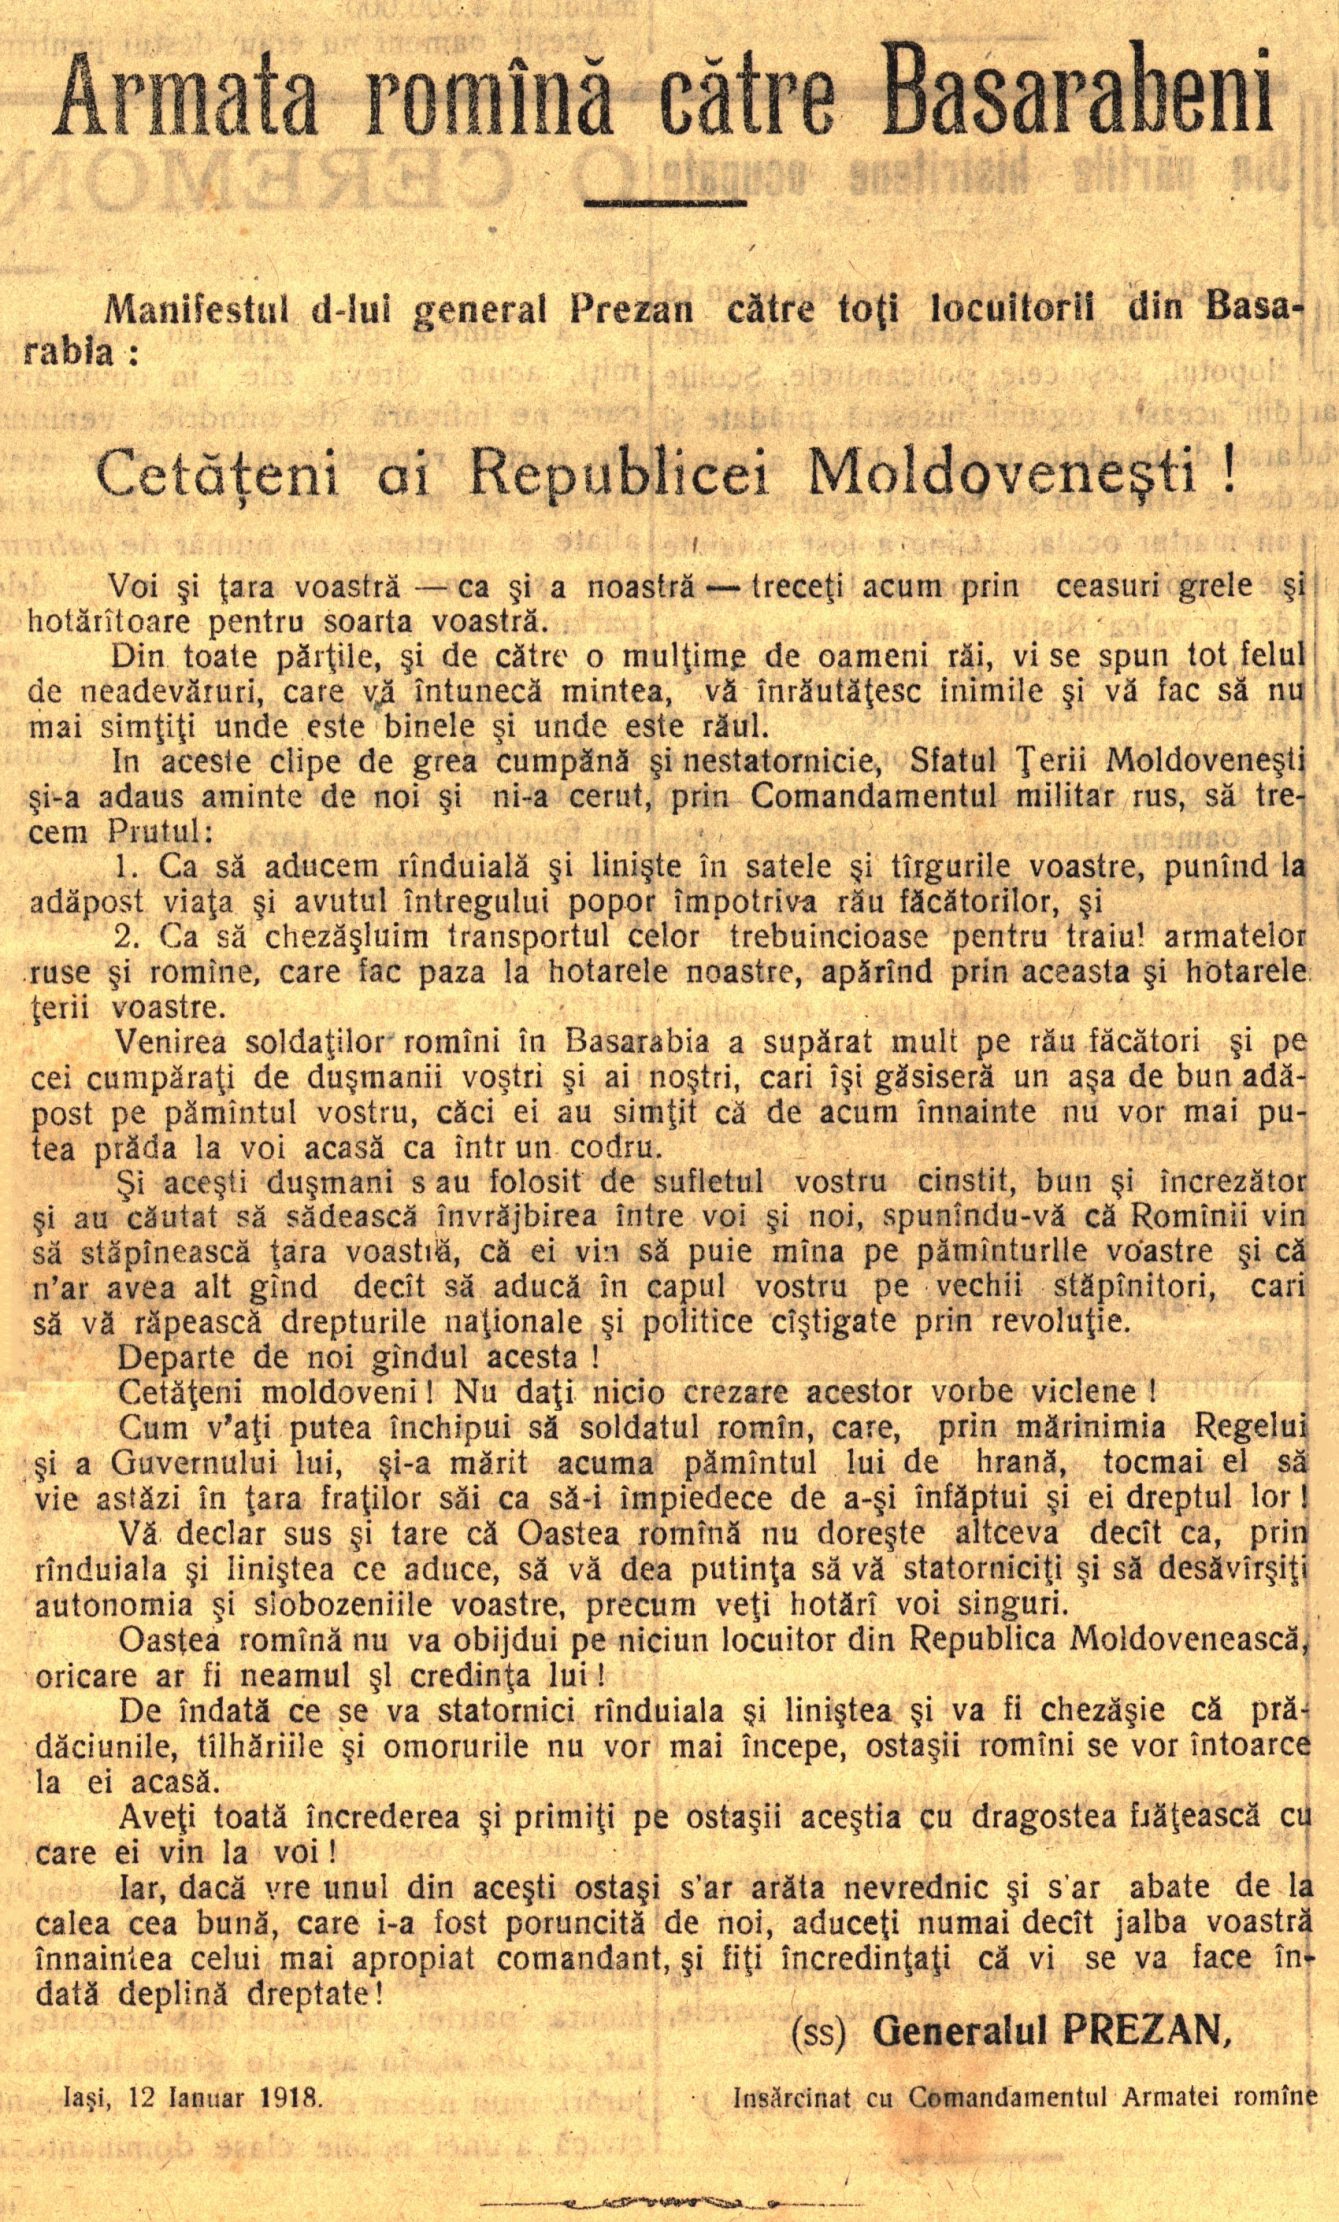 The manifestation of General Prezan to the inhabitants of Bessarabia. January 12, 1918 (ANR)